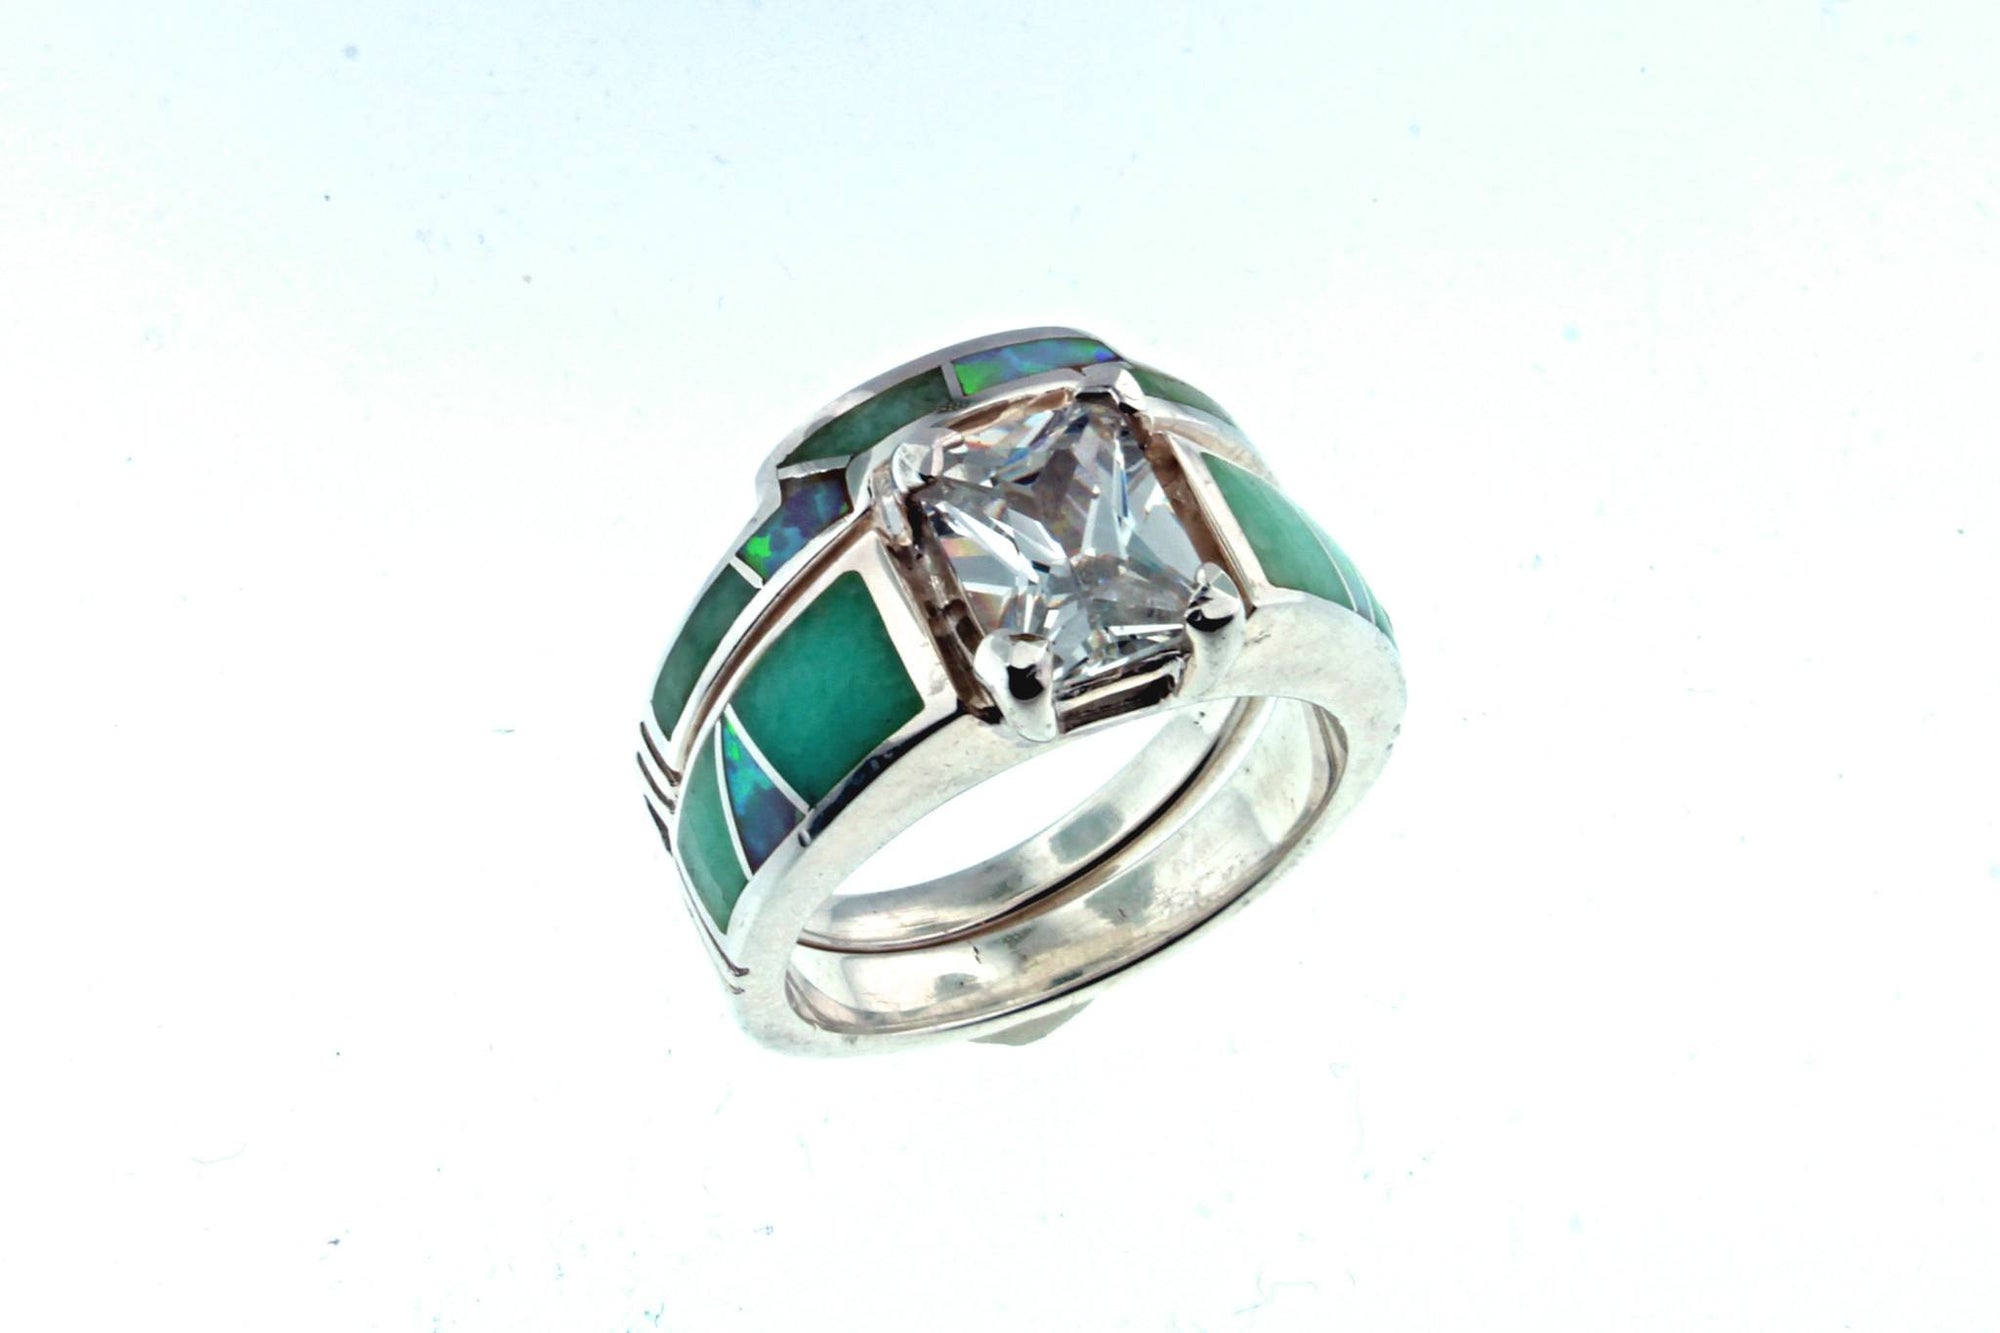 Amazing Light Wedding Ring by David Rosales - Native American Jewelry